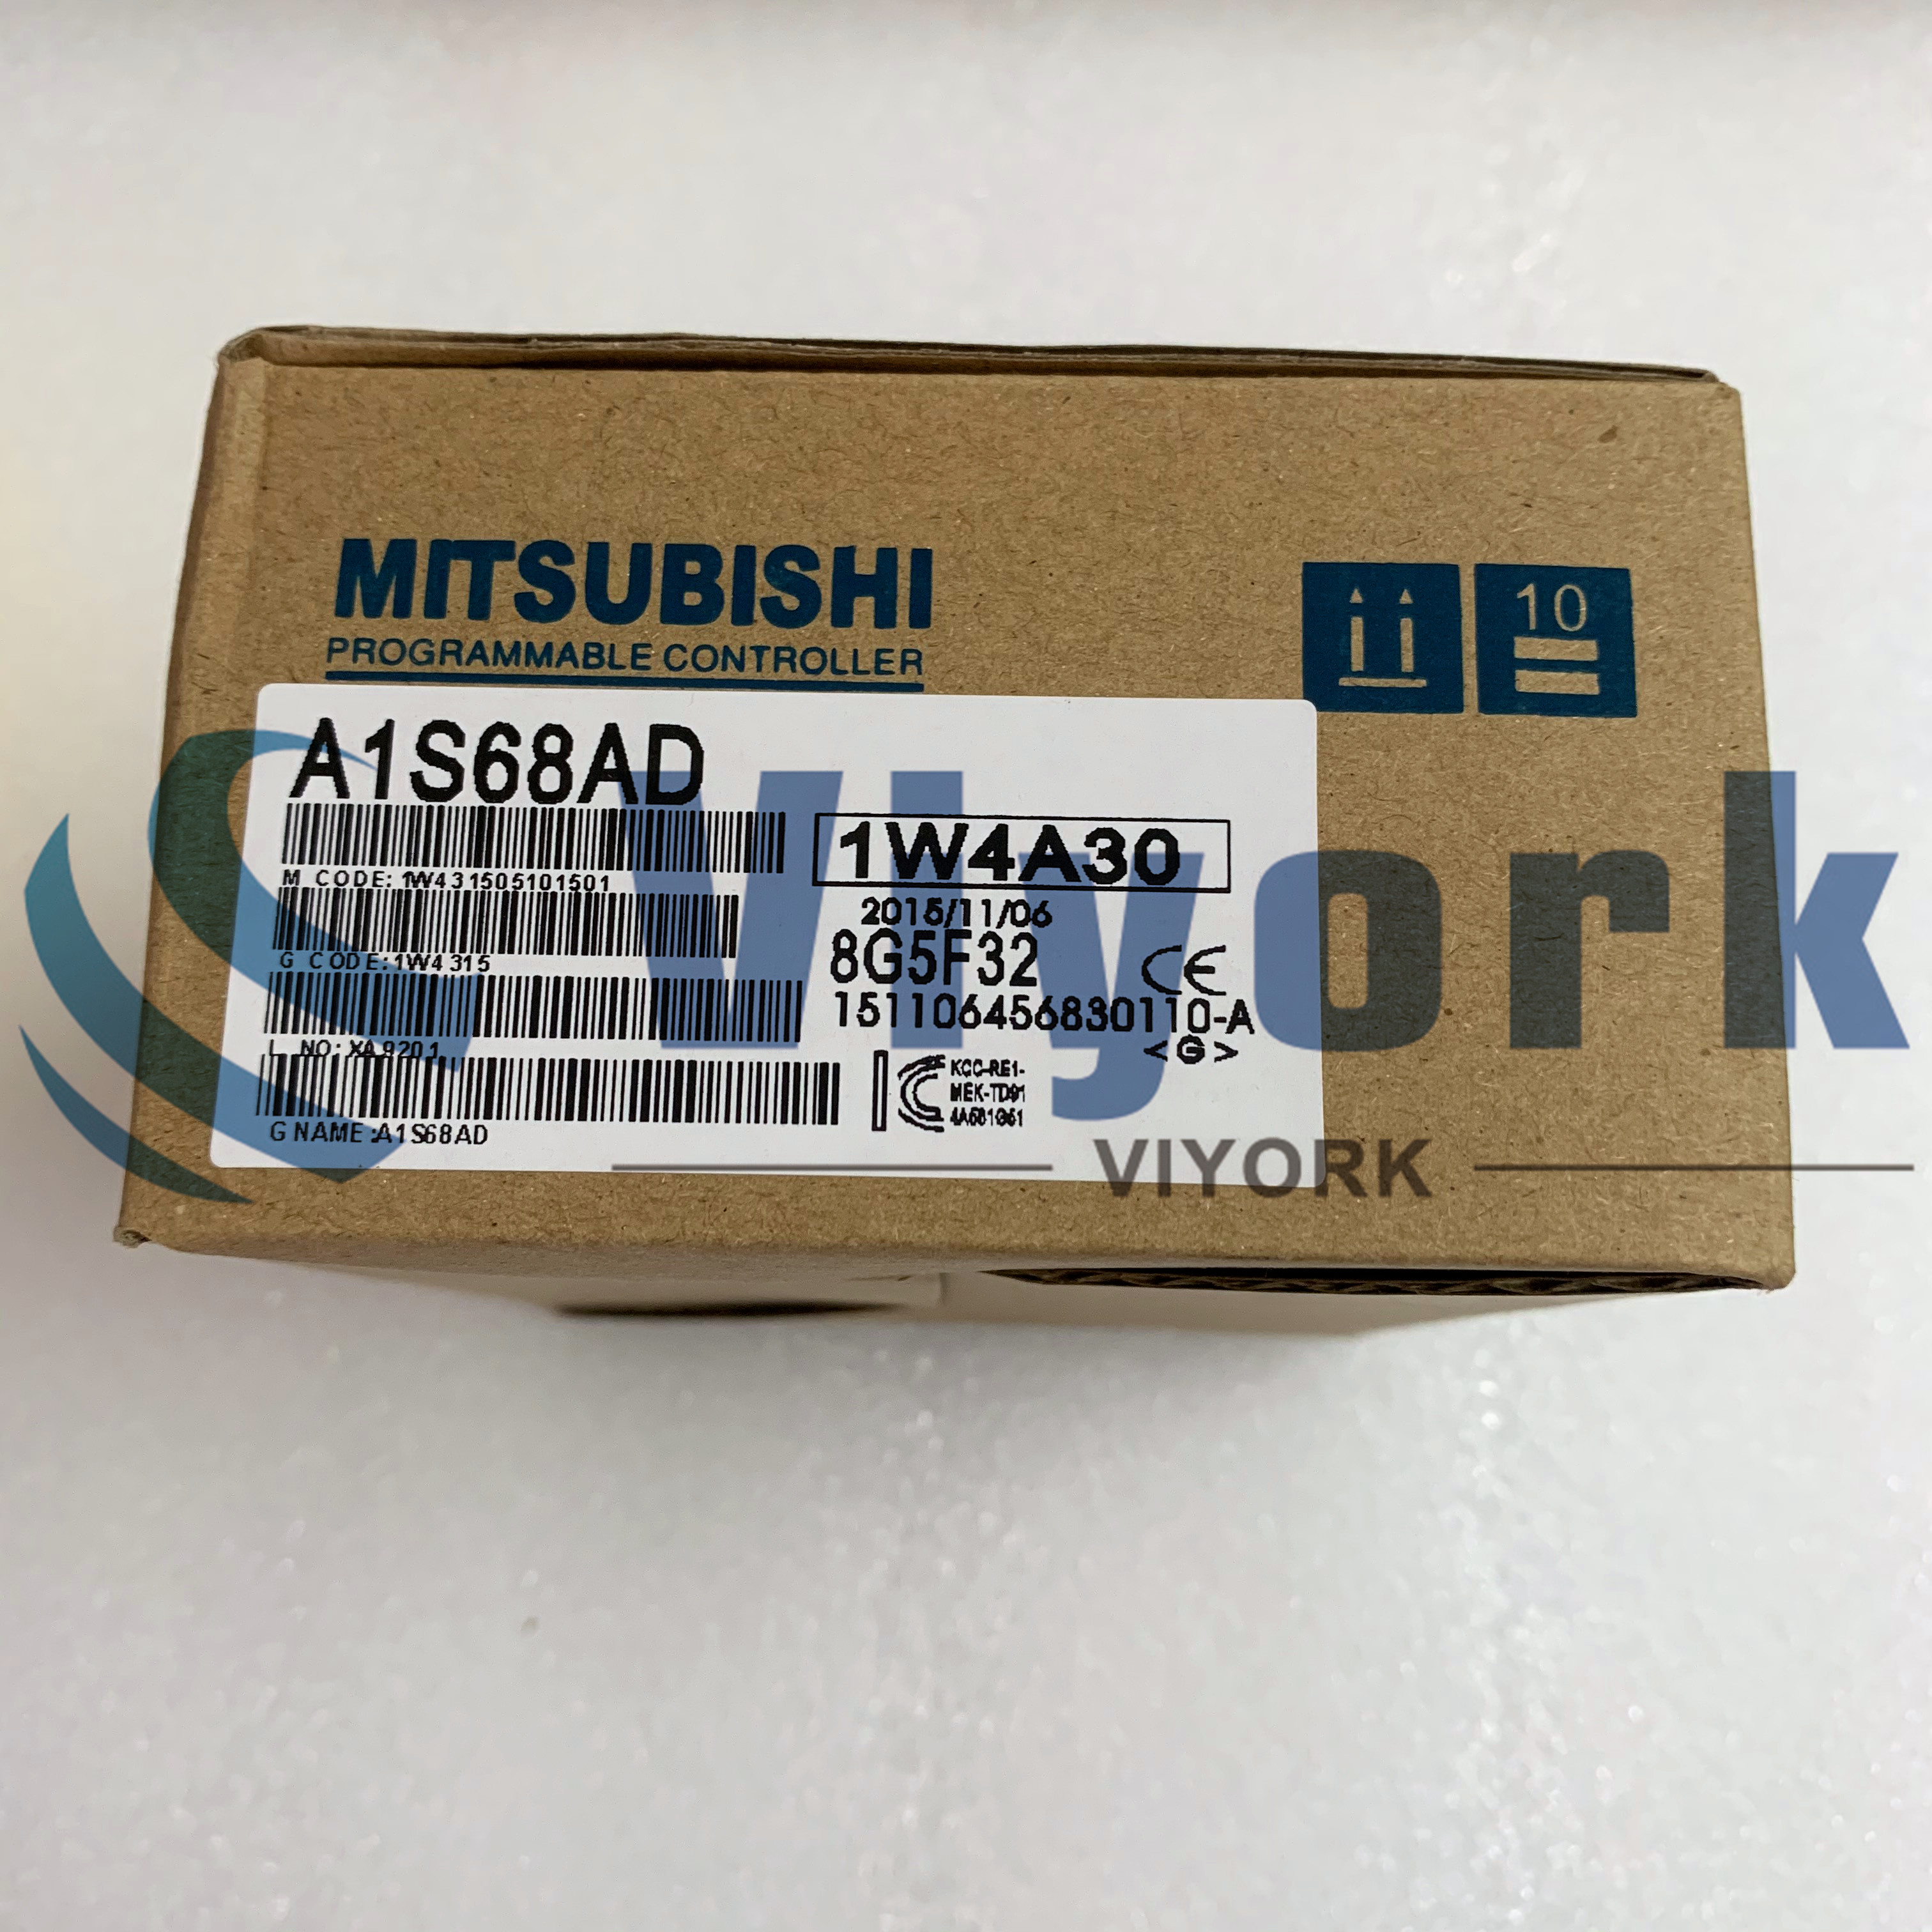 Mitsubishi A1S68AD INPUT MODULE 8 POINT ANALOG 0-20 MA NEG 10-10 VDC NEW